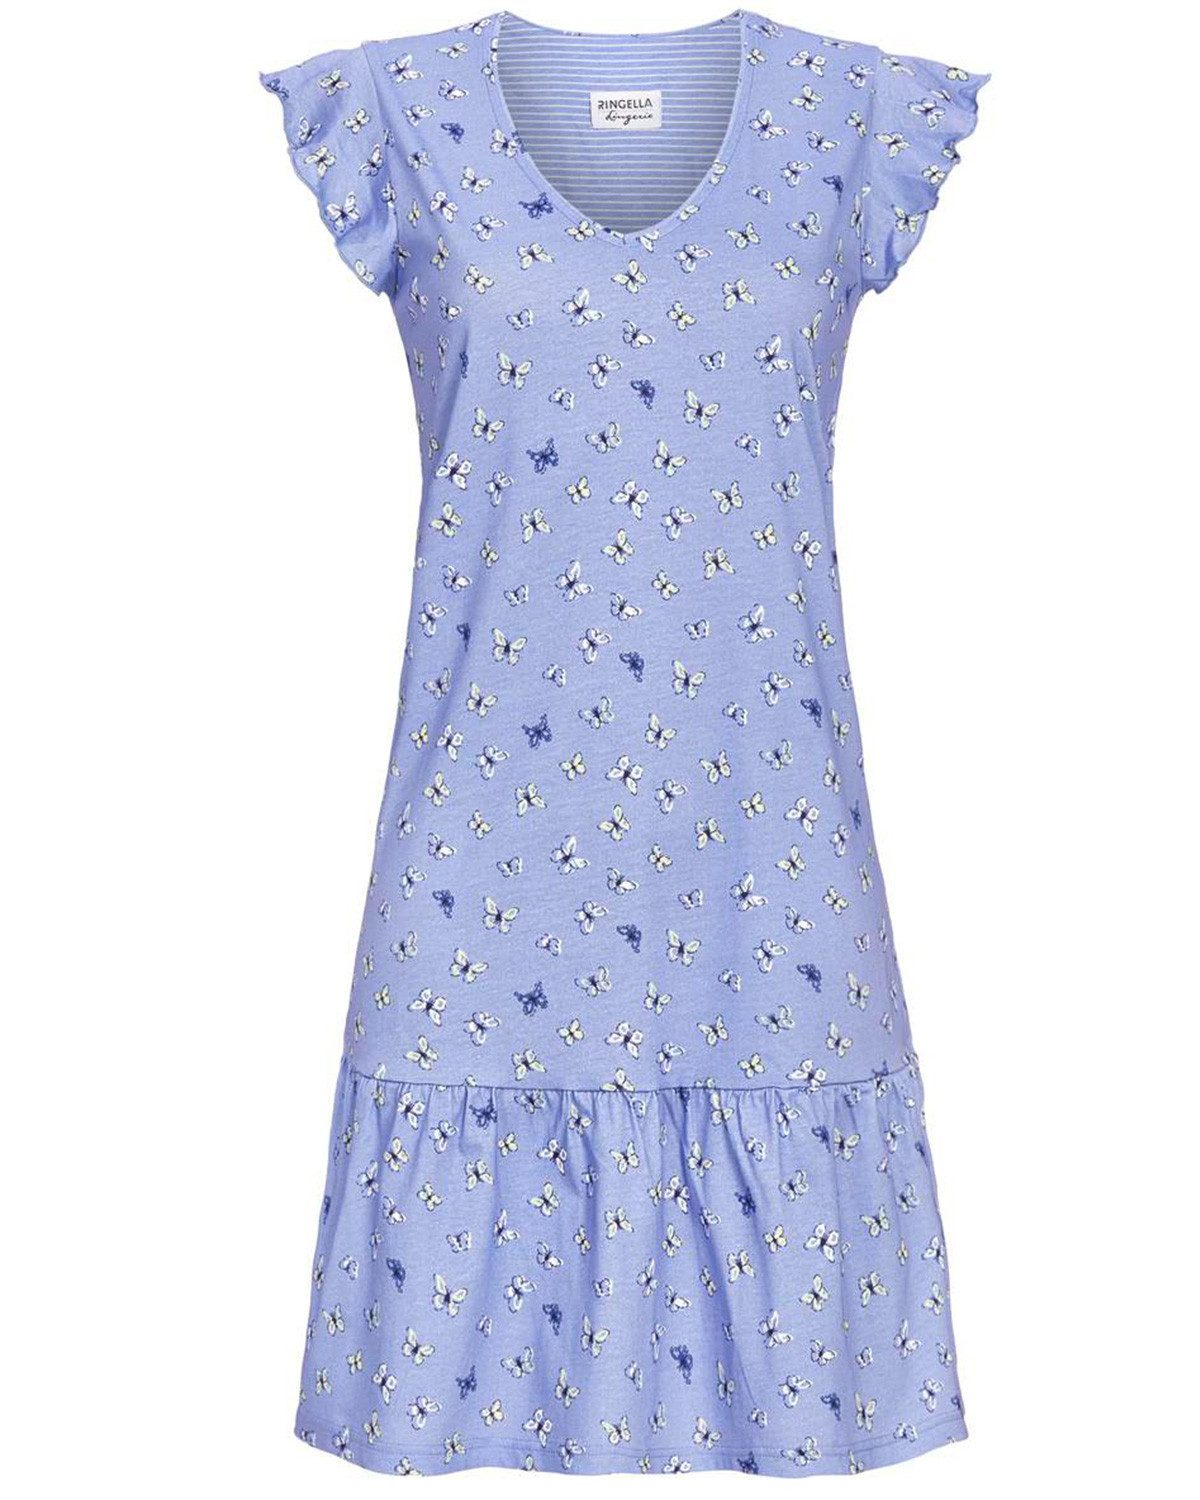 Ringella Nachthemd Kurzarm 'Butterflys' 4261017, Milky Blue